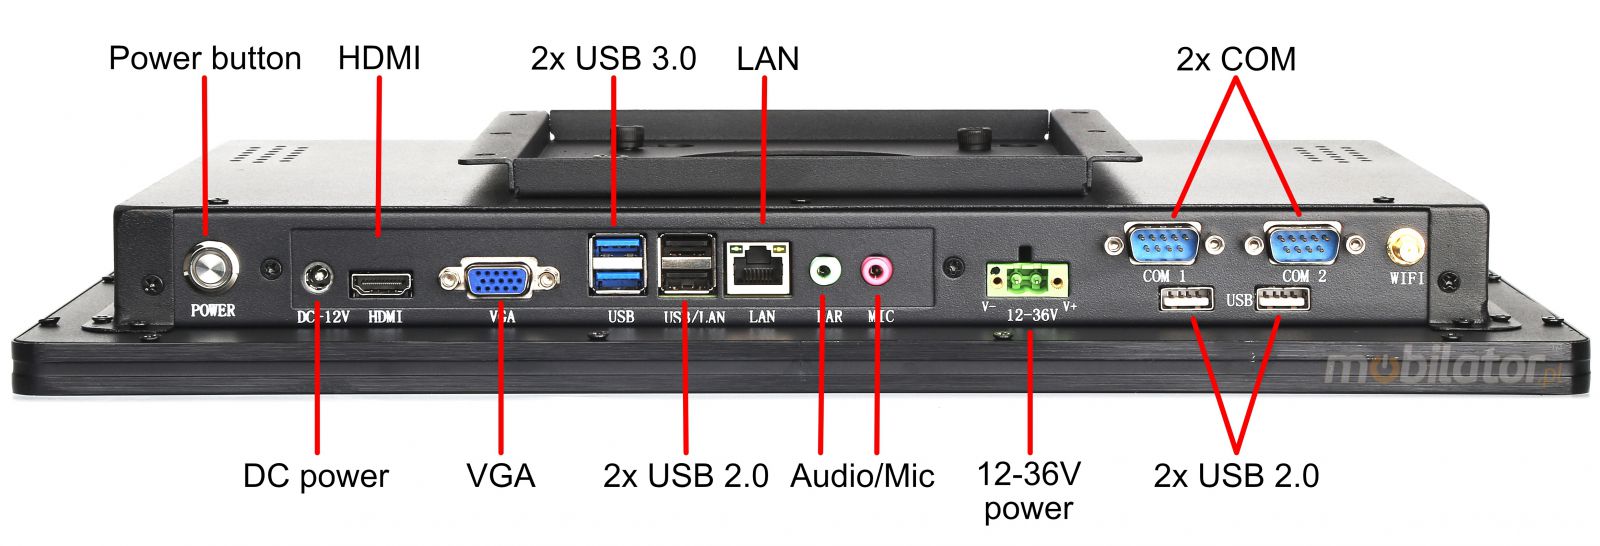 BIBOX-215PC2 connectors: 2x USB 3.0 | 2x USB 2.0 | 2x COM | 2x LAN 1x VGA | 1x HDMI | DC 12V